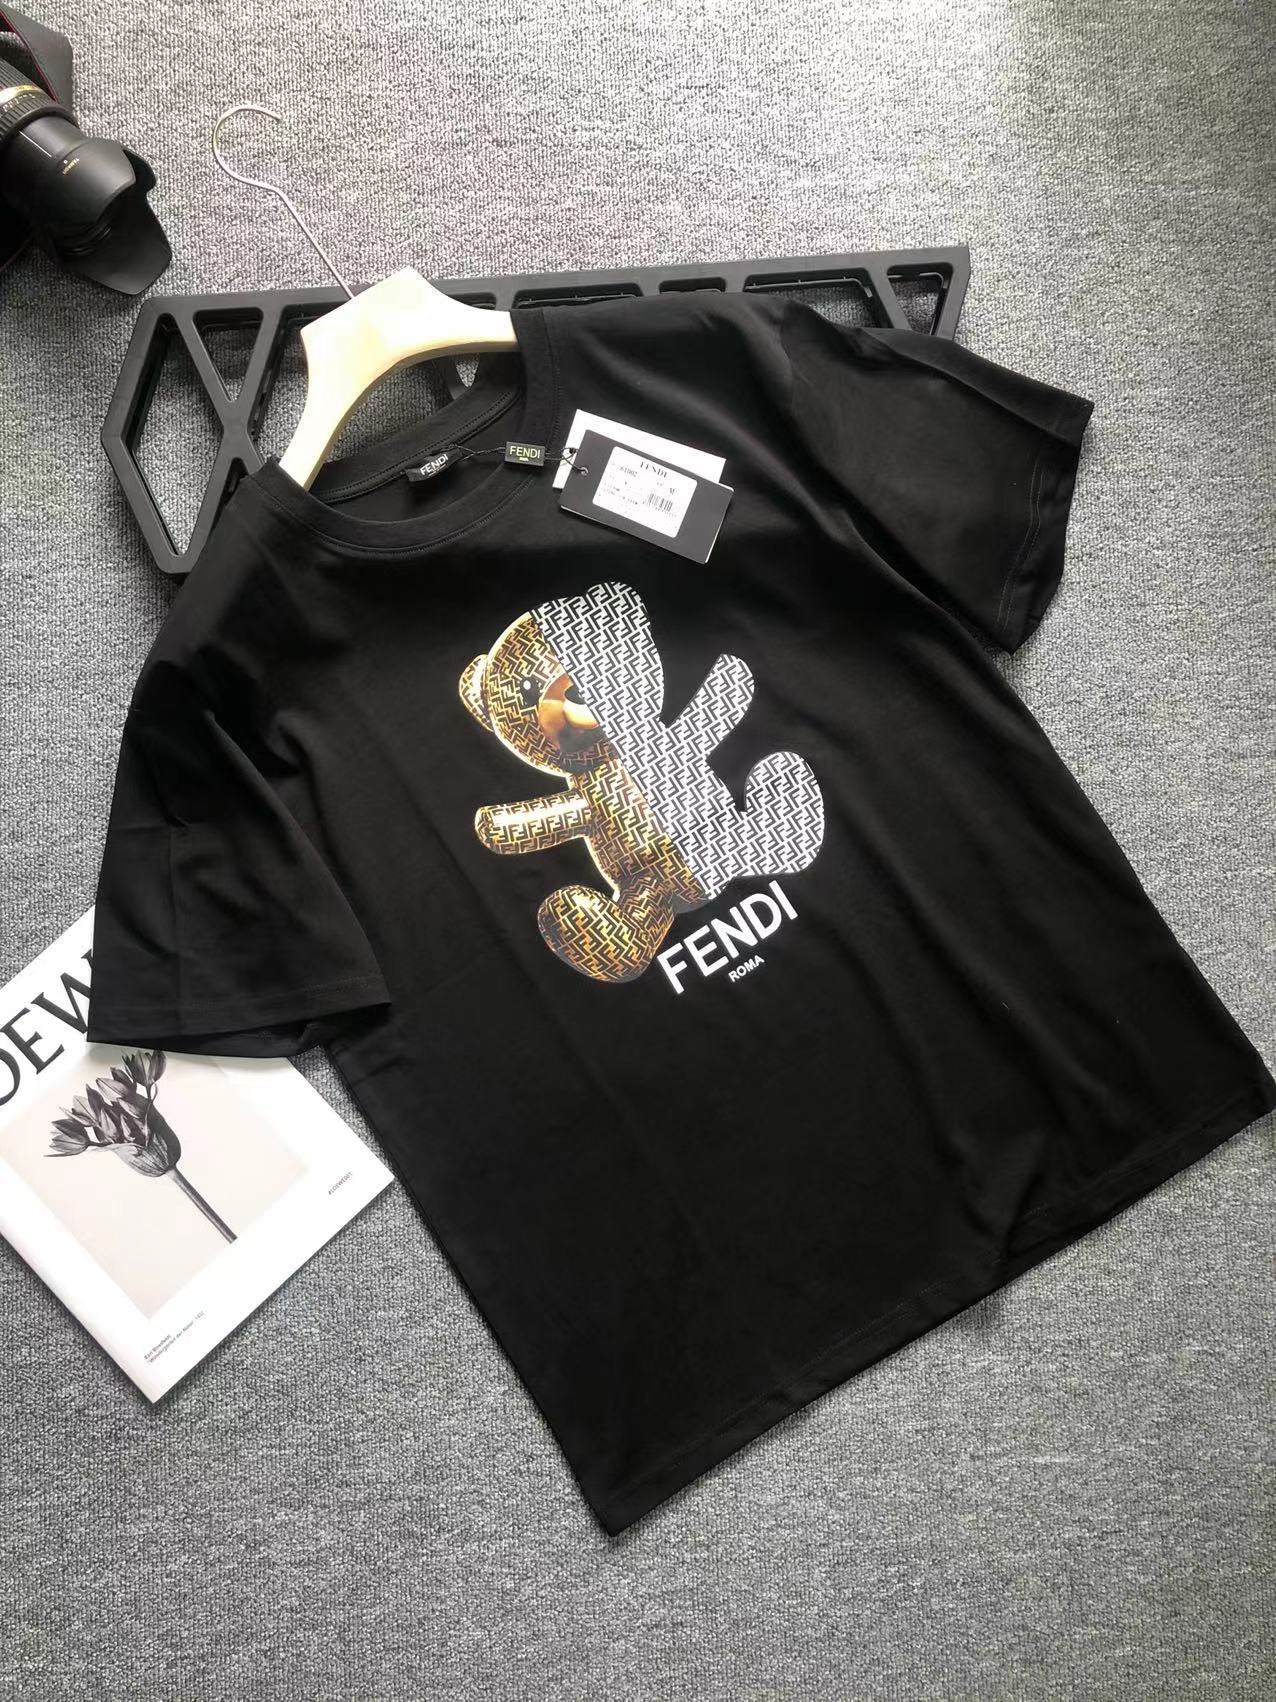 【  High quality  】Fendi classic logo Bear printed short sleeve T-shirt men women unisex